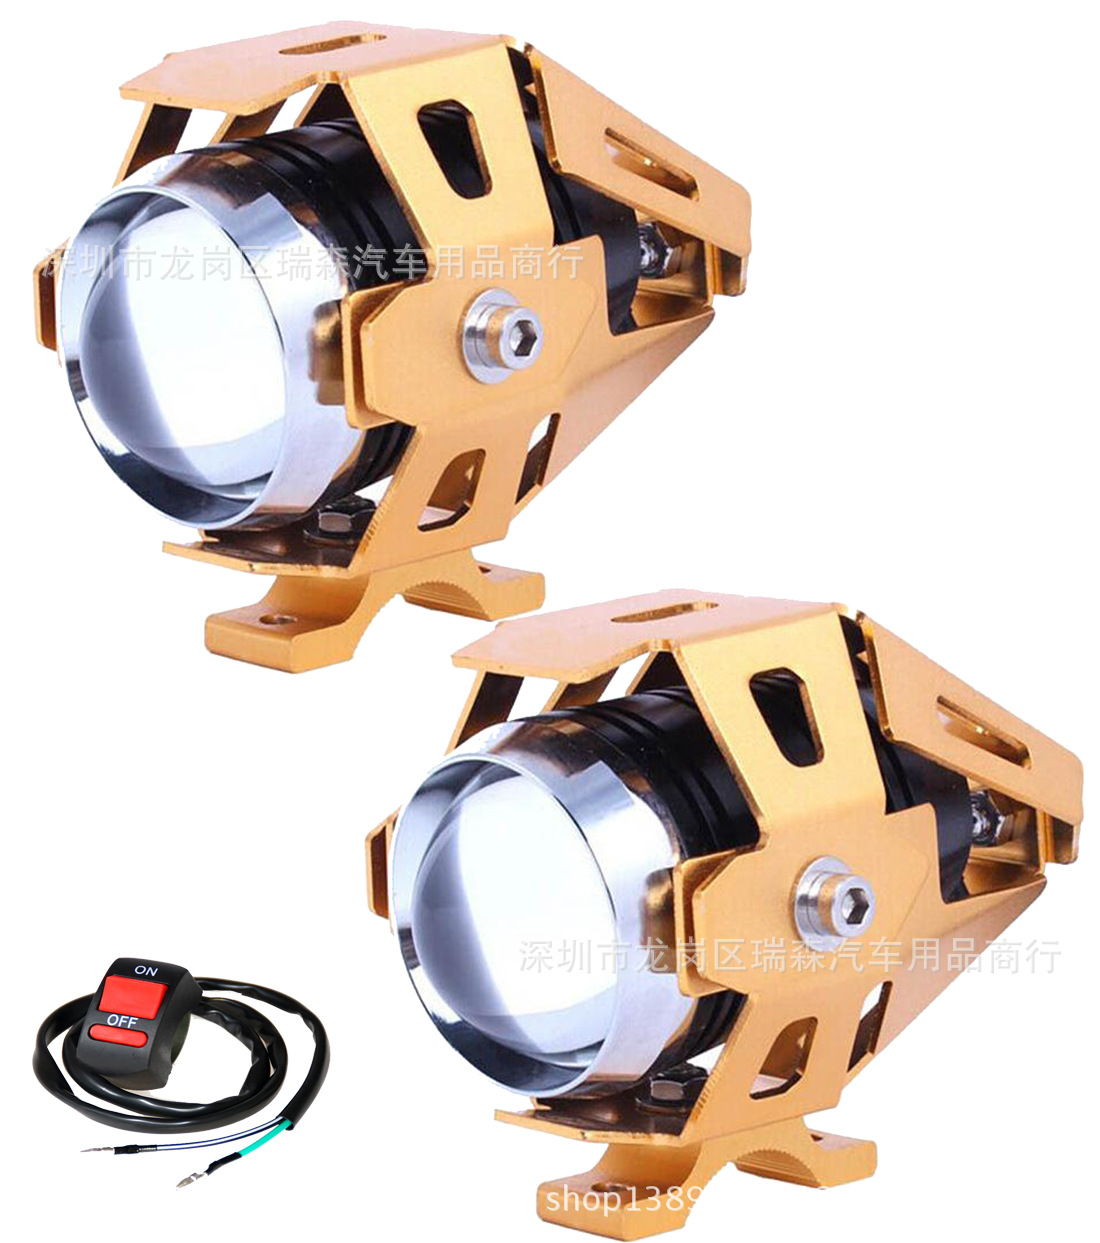 Supply Motorcycle Electric Vehicle Light Laser Gun U5/U7 Angel Eye Pedal Moto Modified LED Headlights